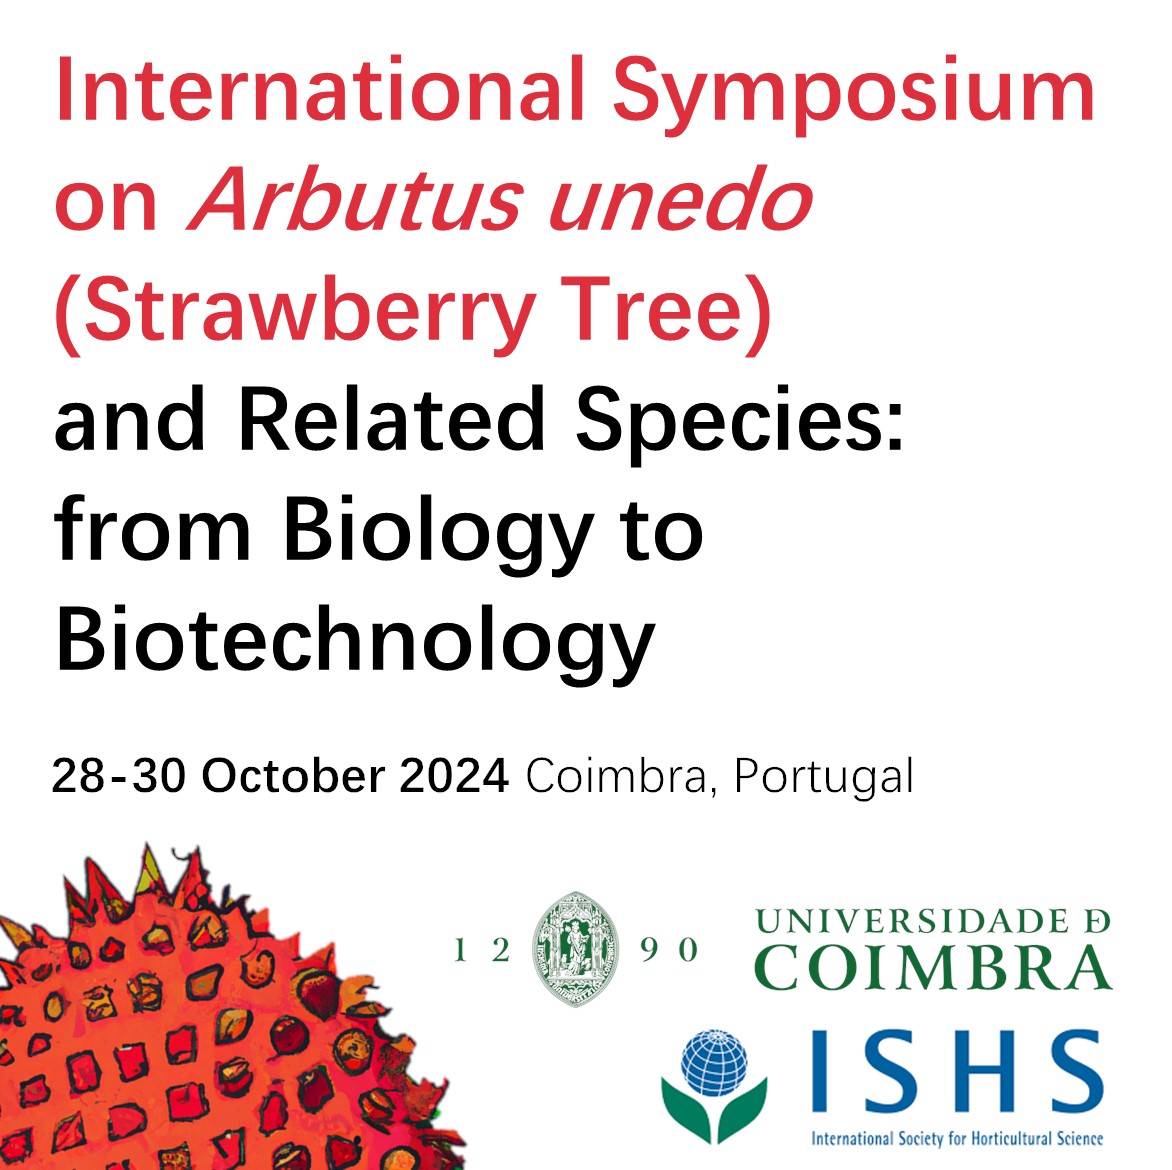 International Symposium on Arbutus unedo - Inscrio de Estudante